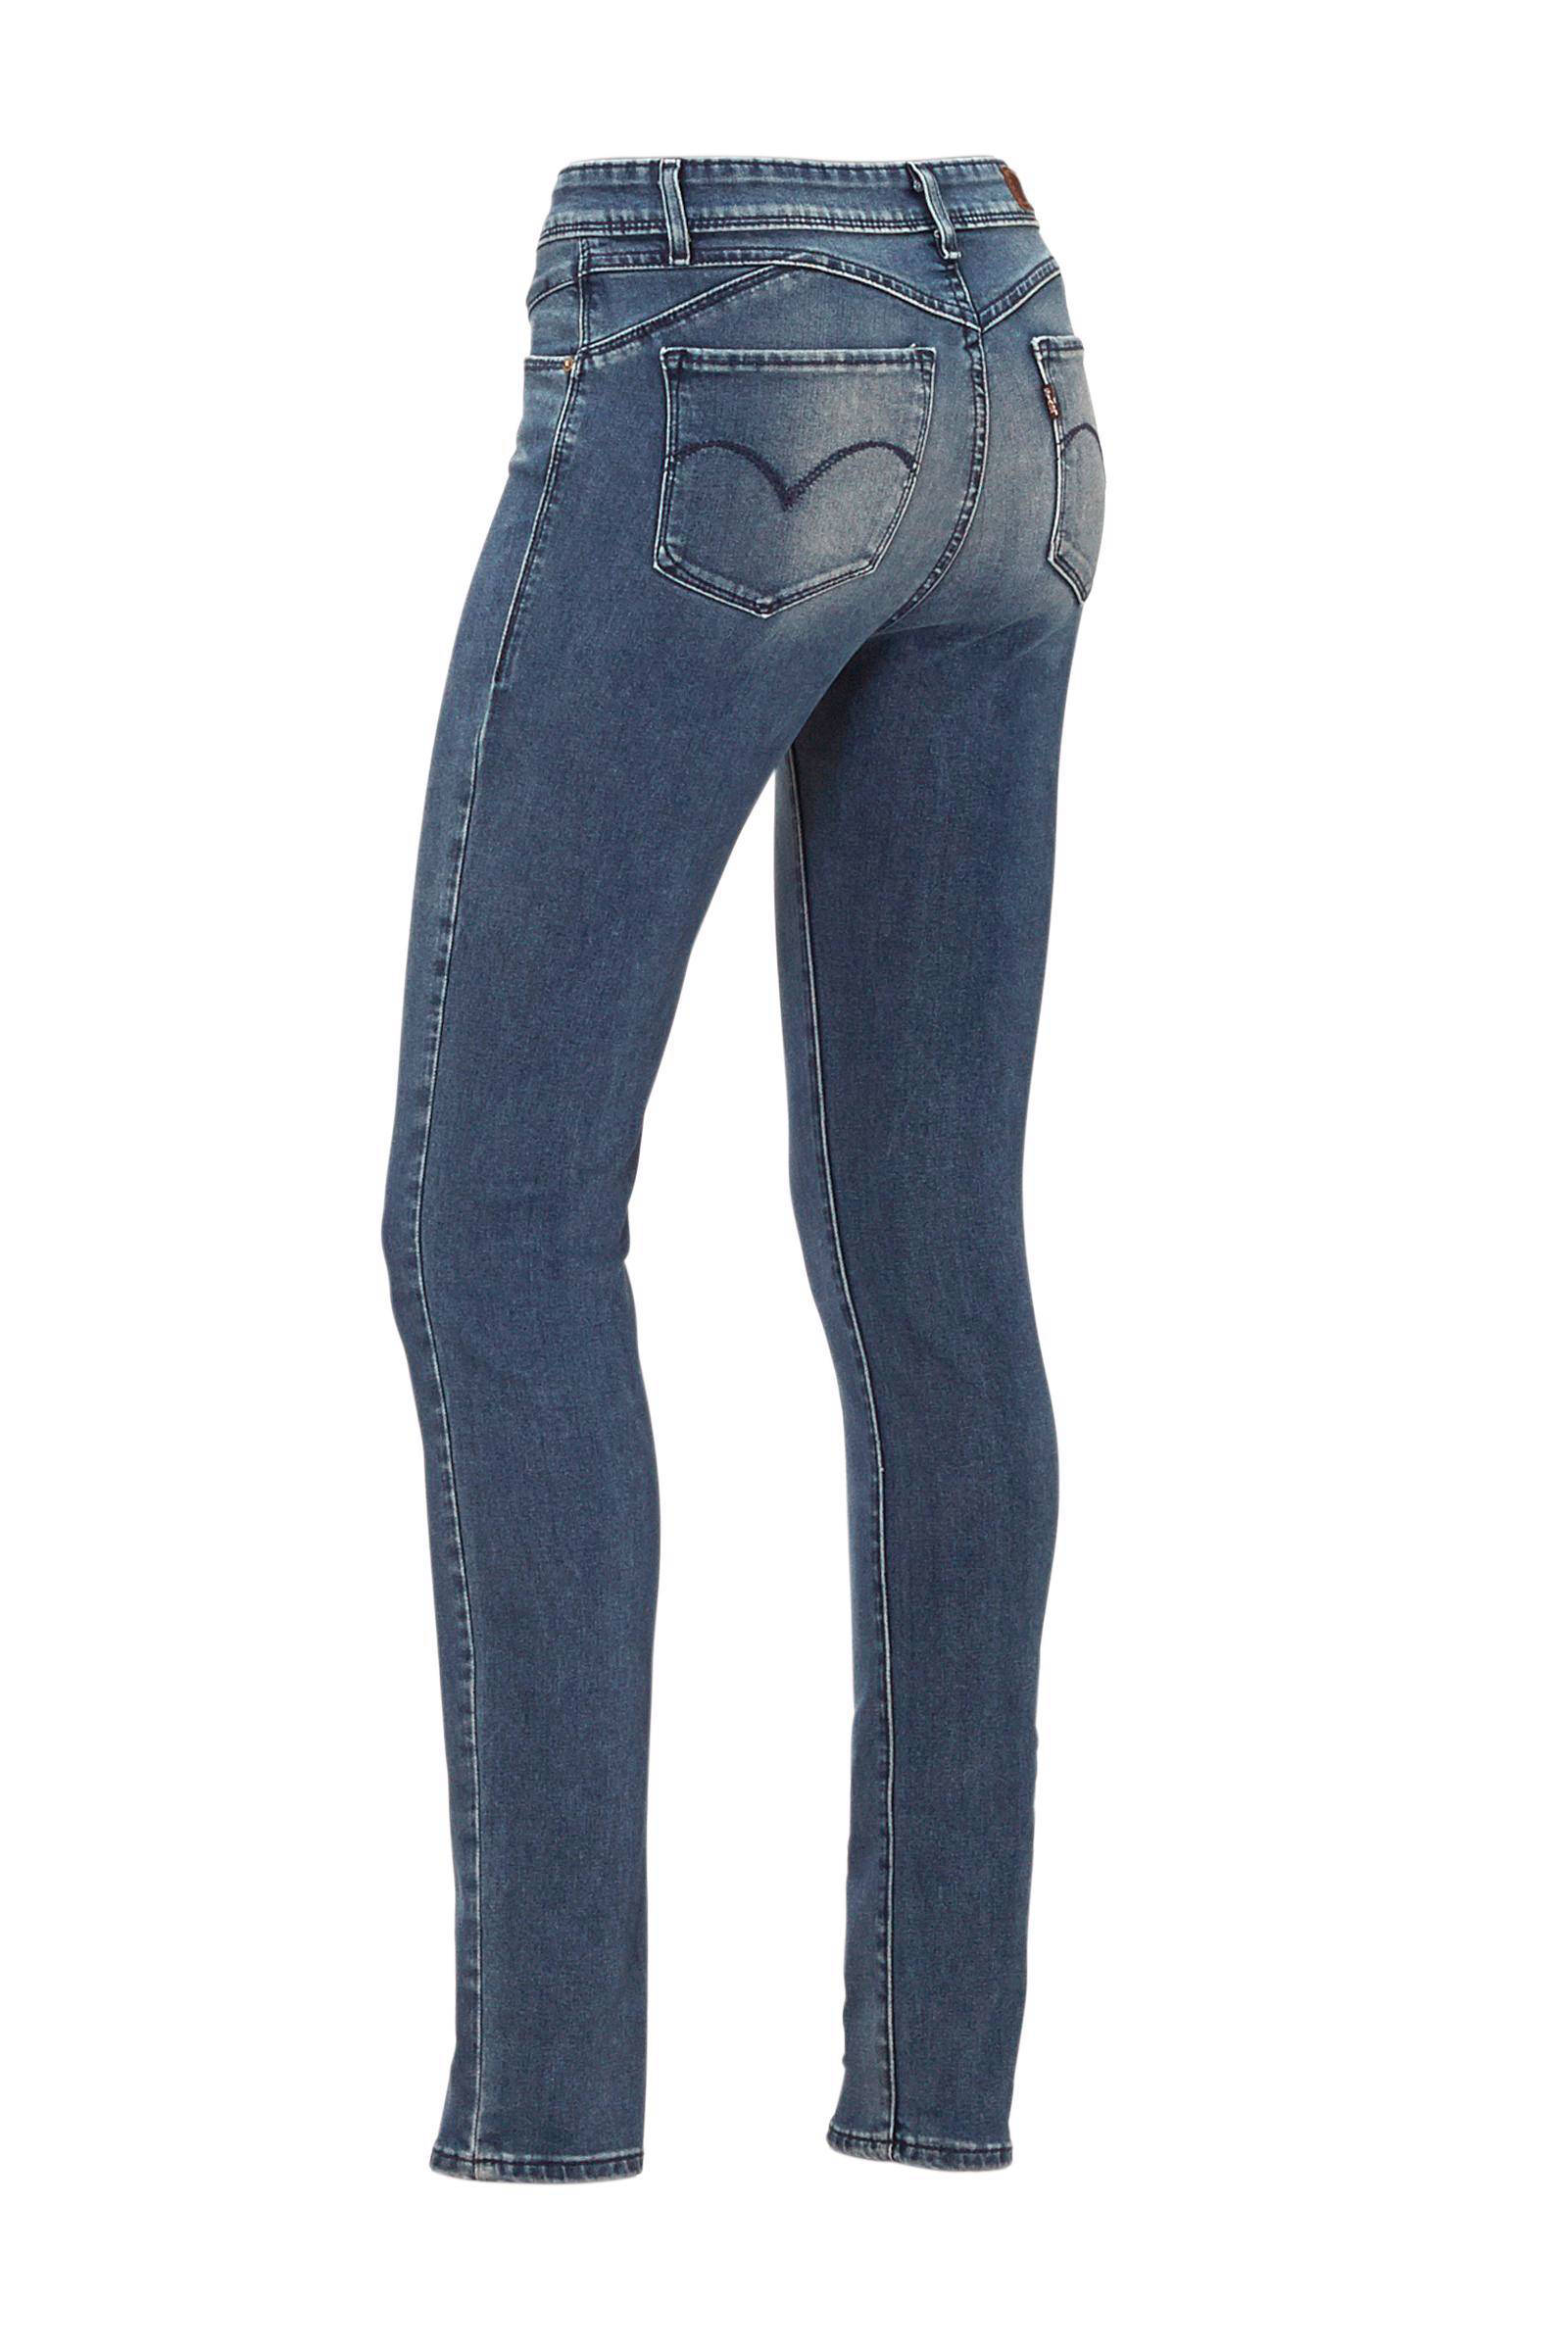 levi's curve skinny jeans